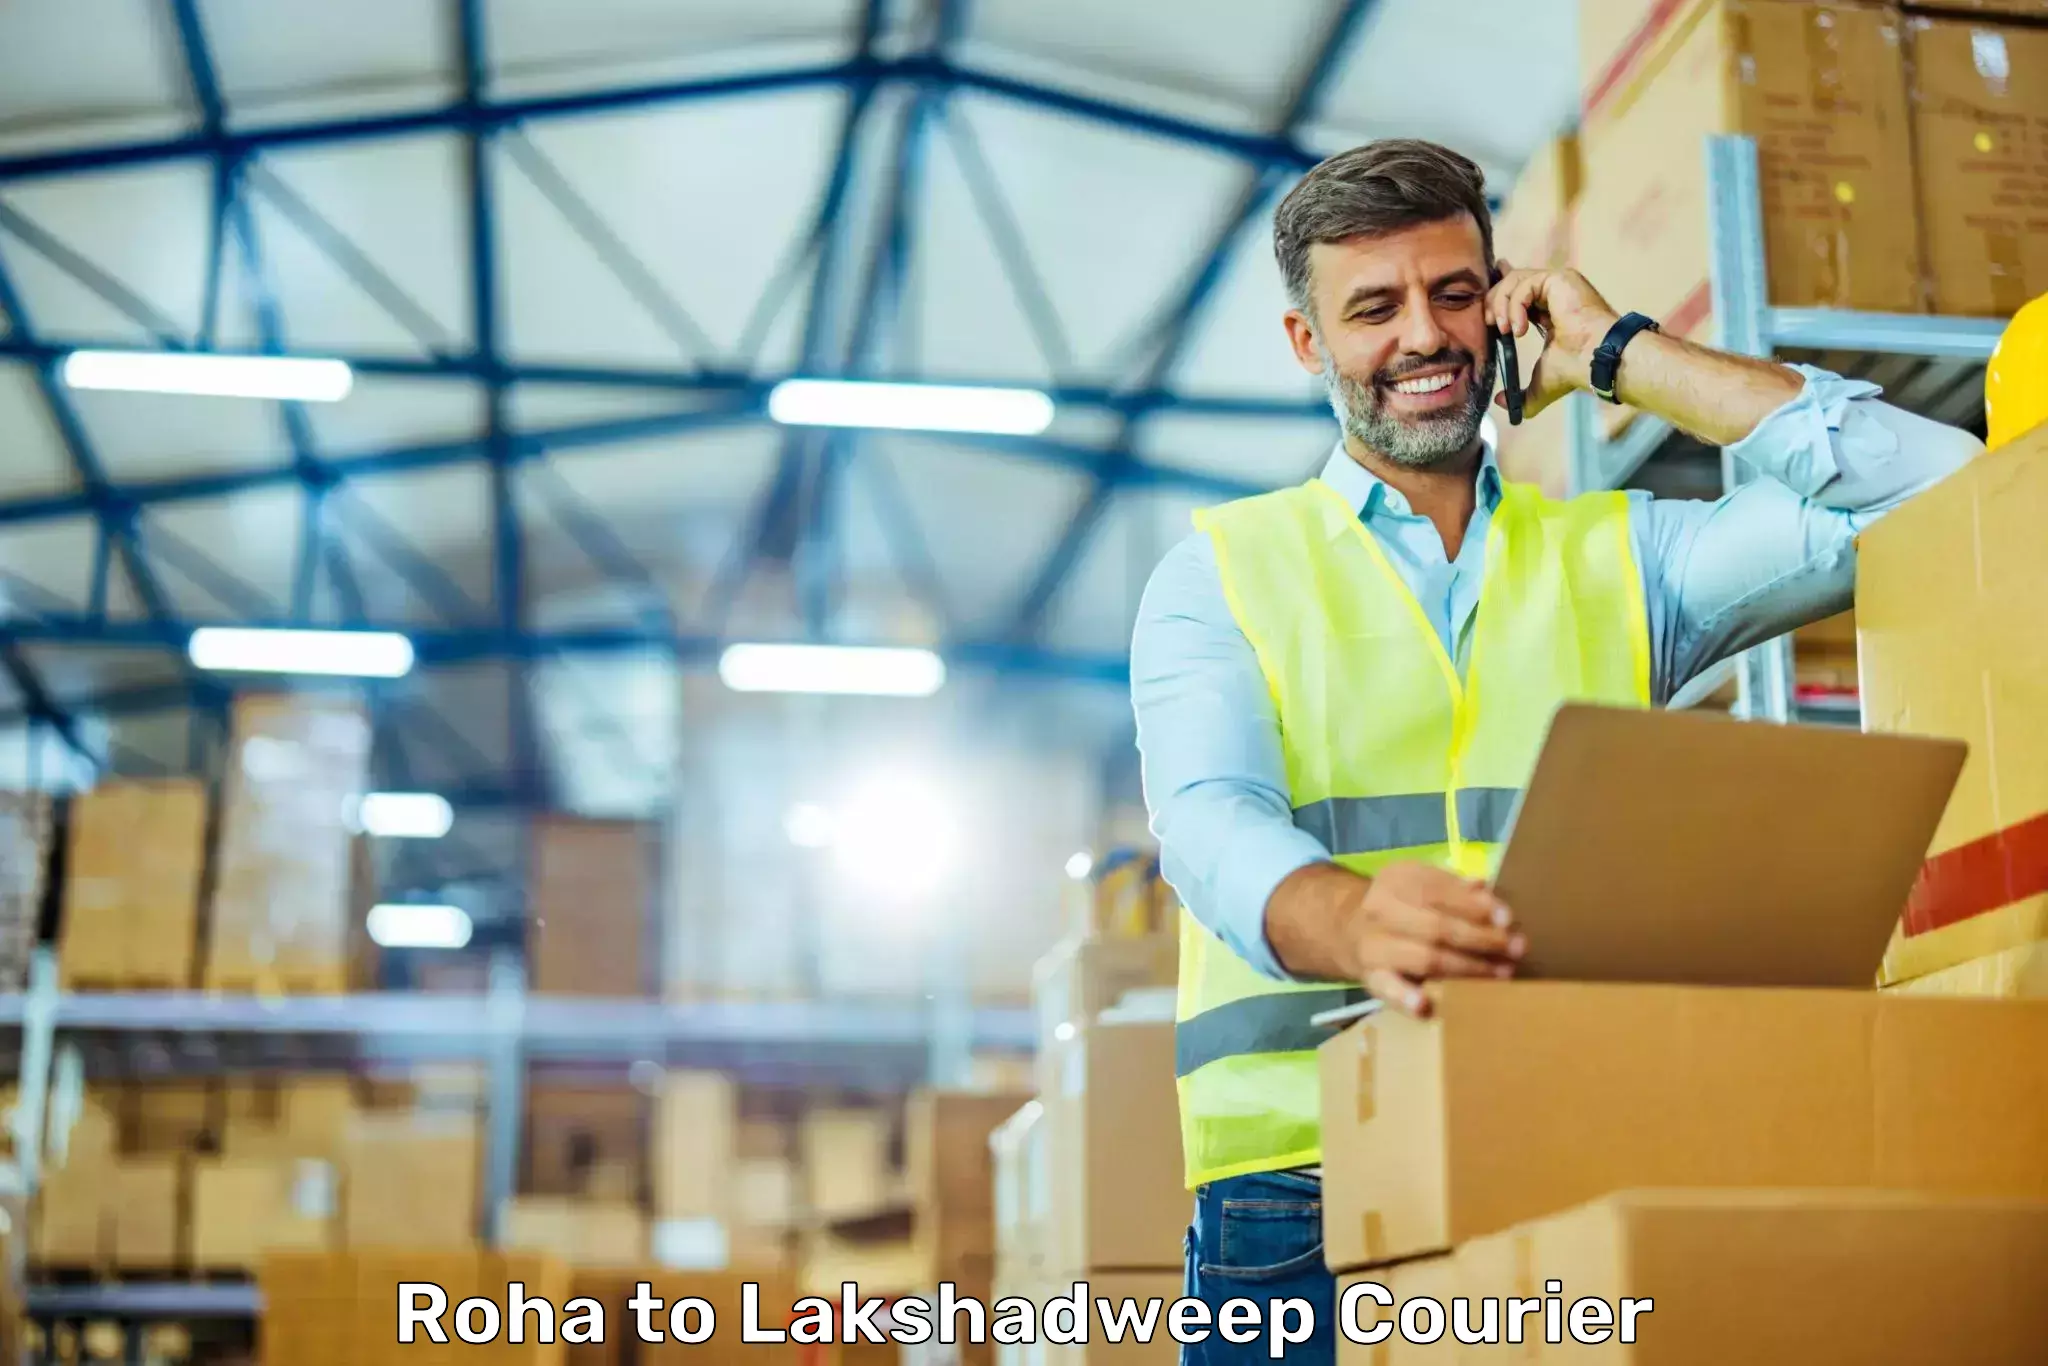 Express logistics service Roha to Lakshadweep